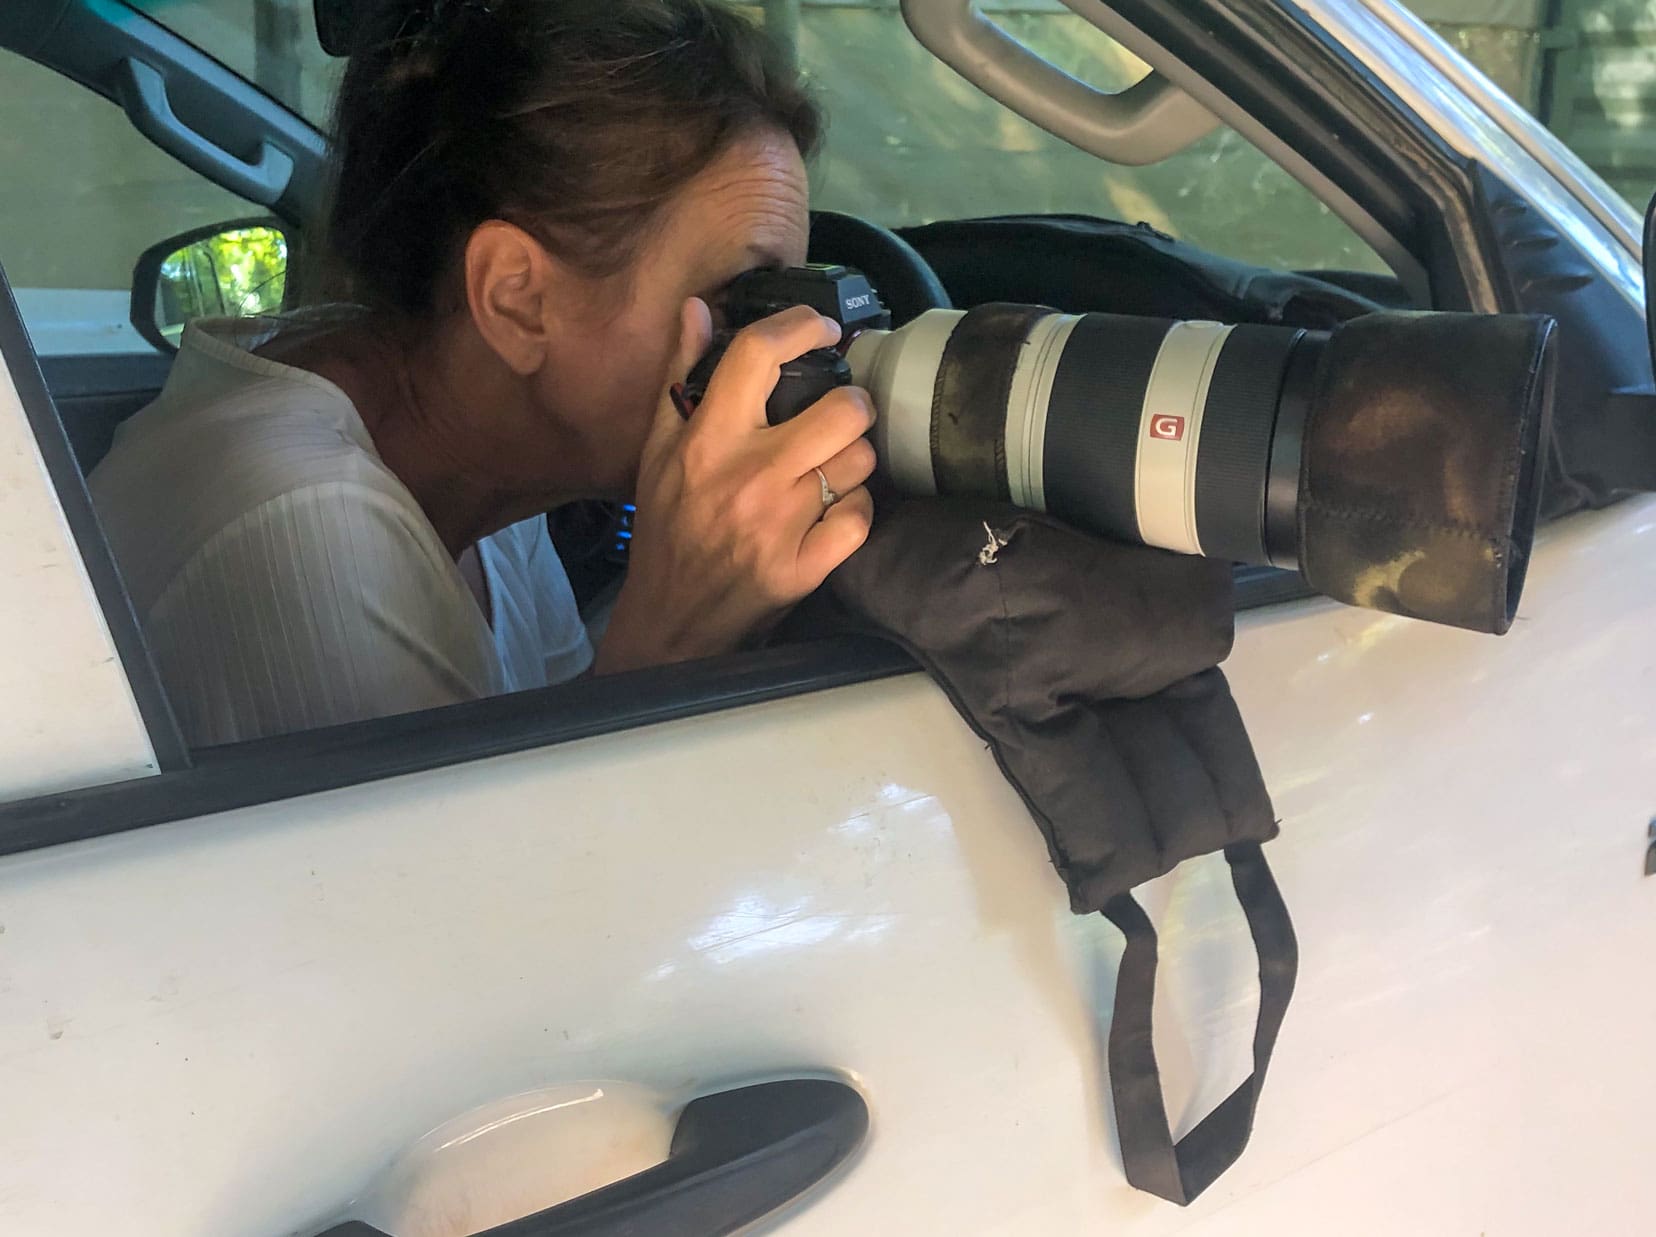 safari accessories- camera-bean-bag-on a car window still and under-the-lens